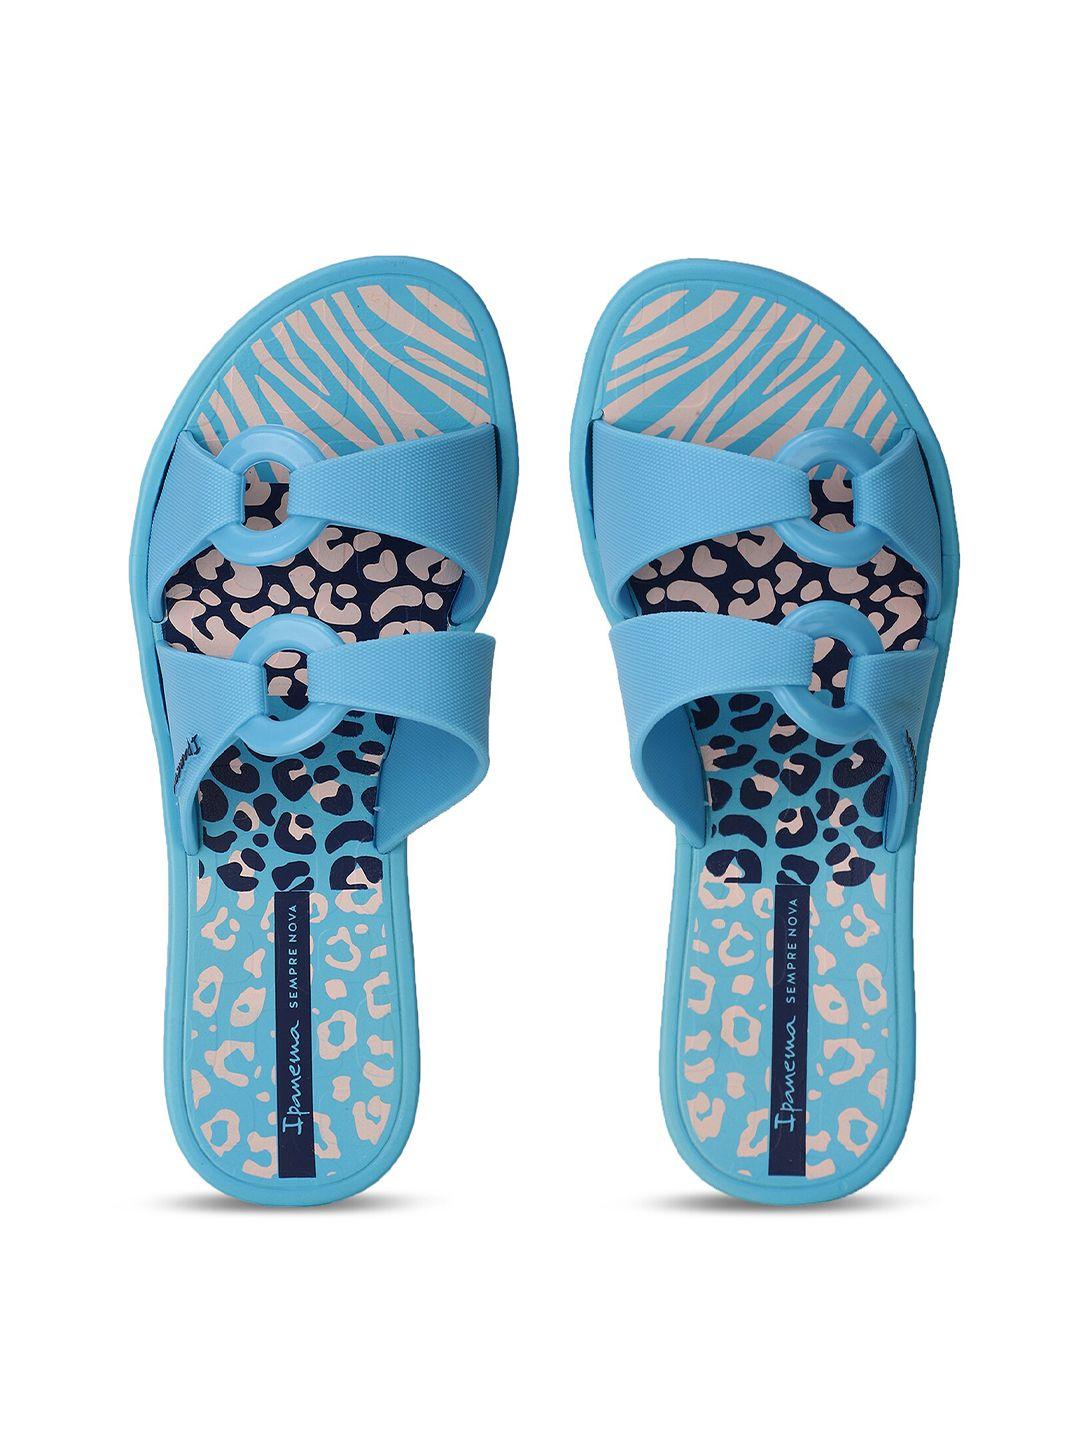 ipanema women blue printed open toe flats